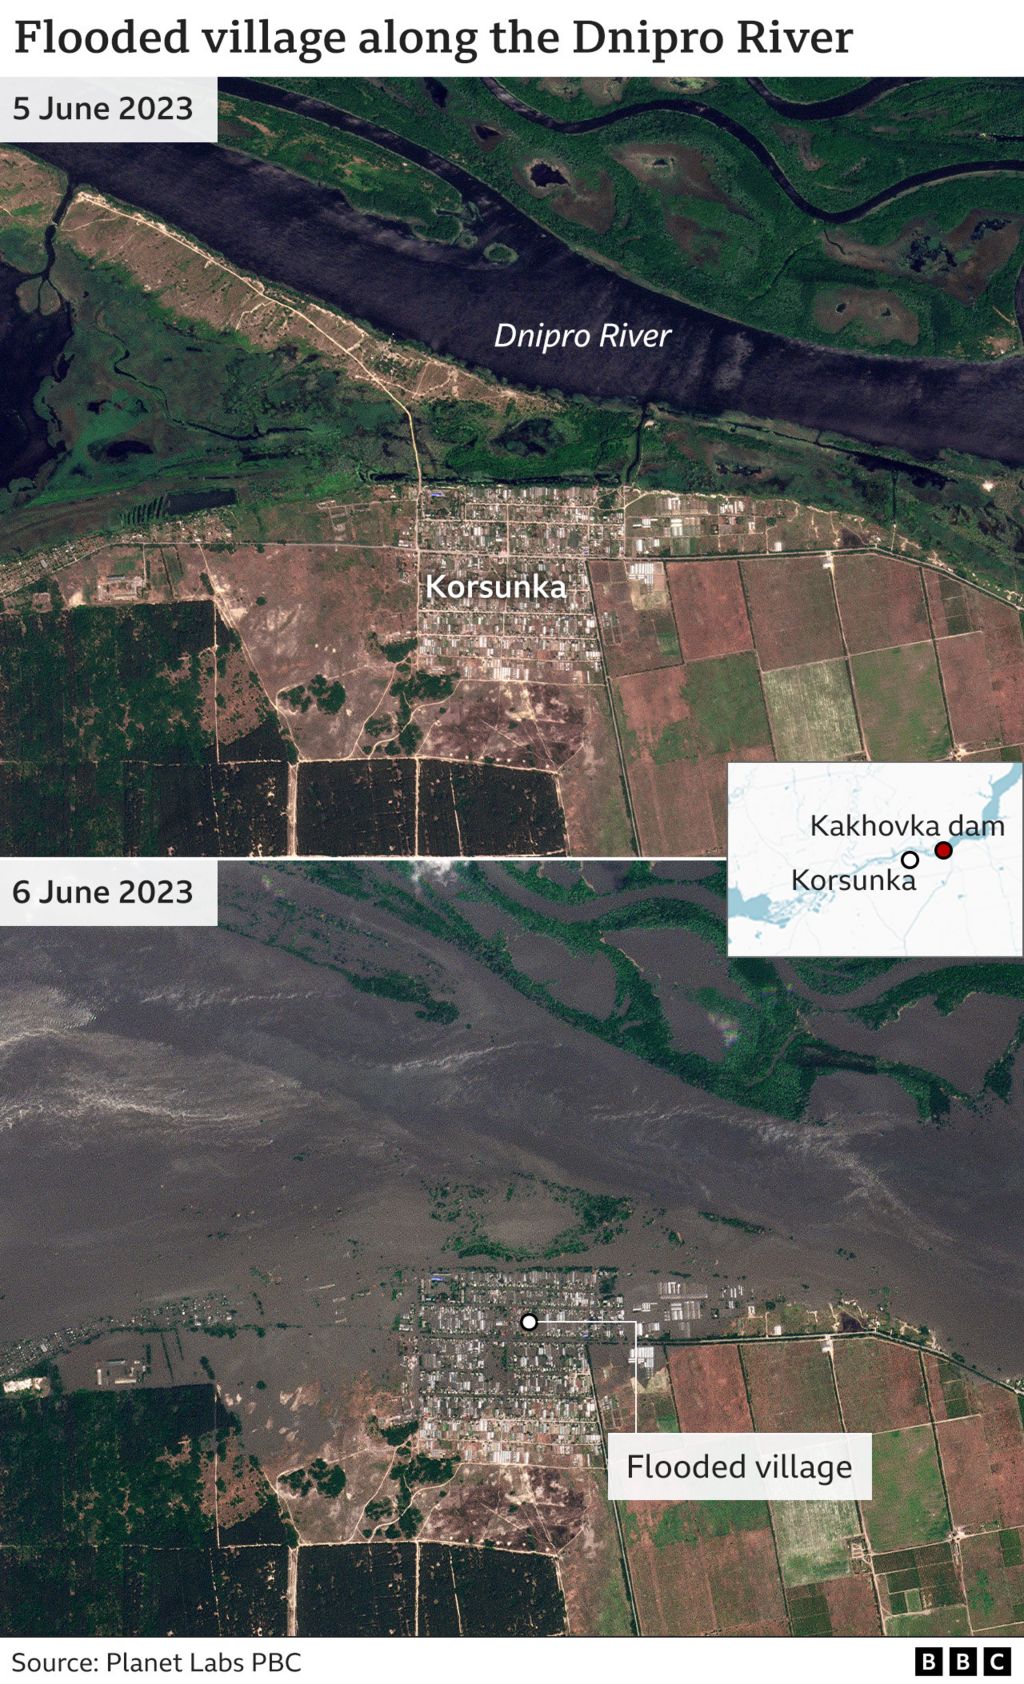 Satellite images showing flooding in Korsunka